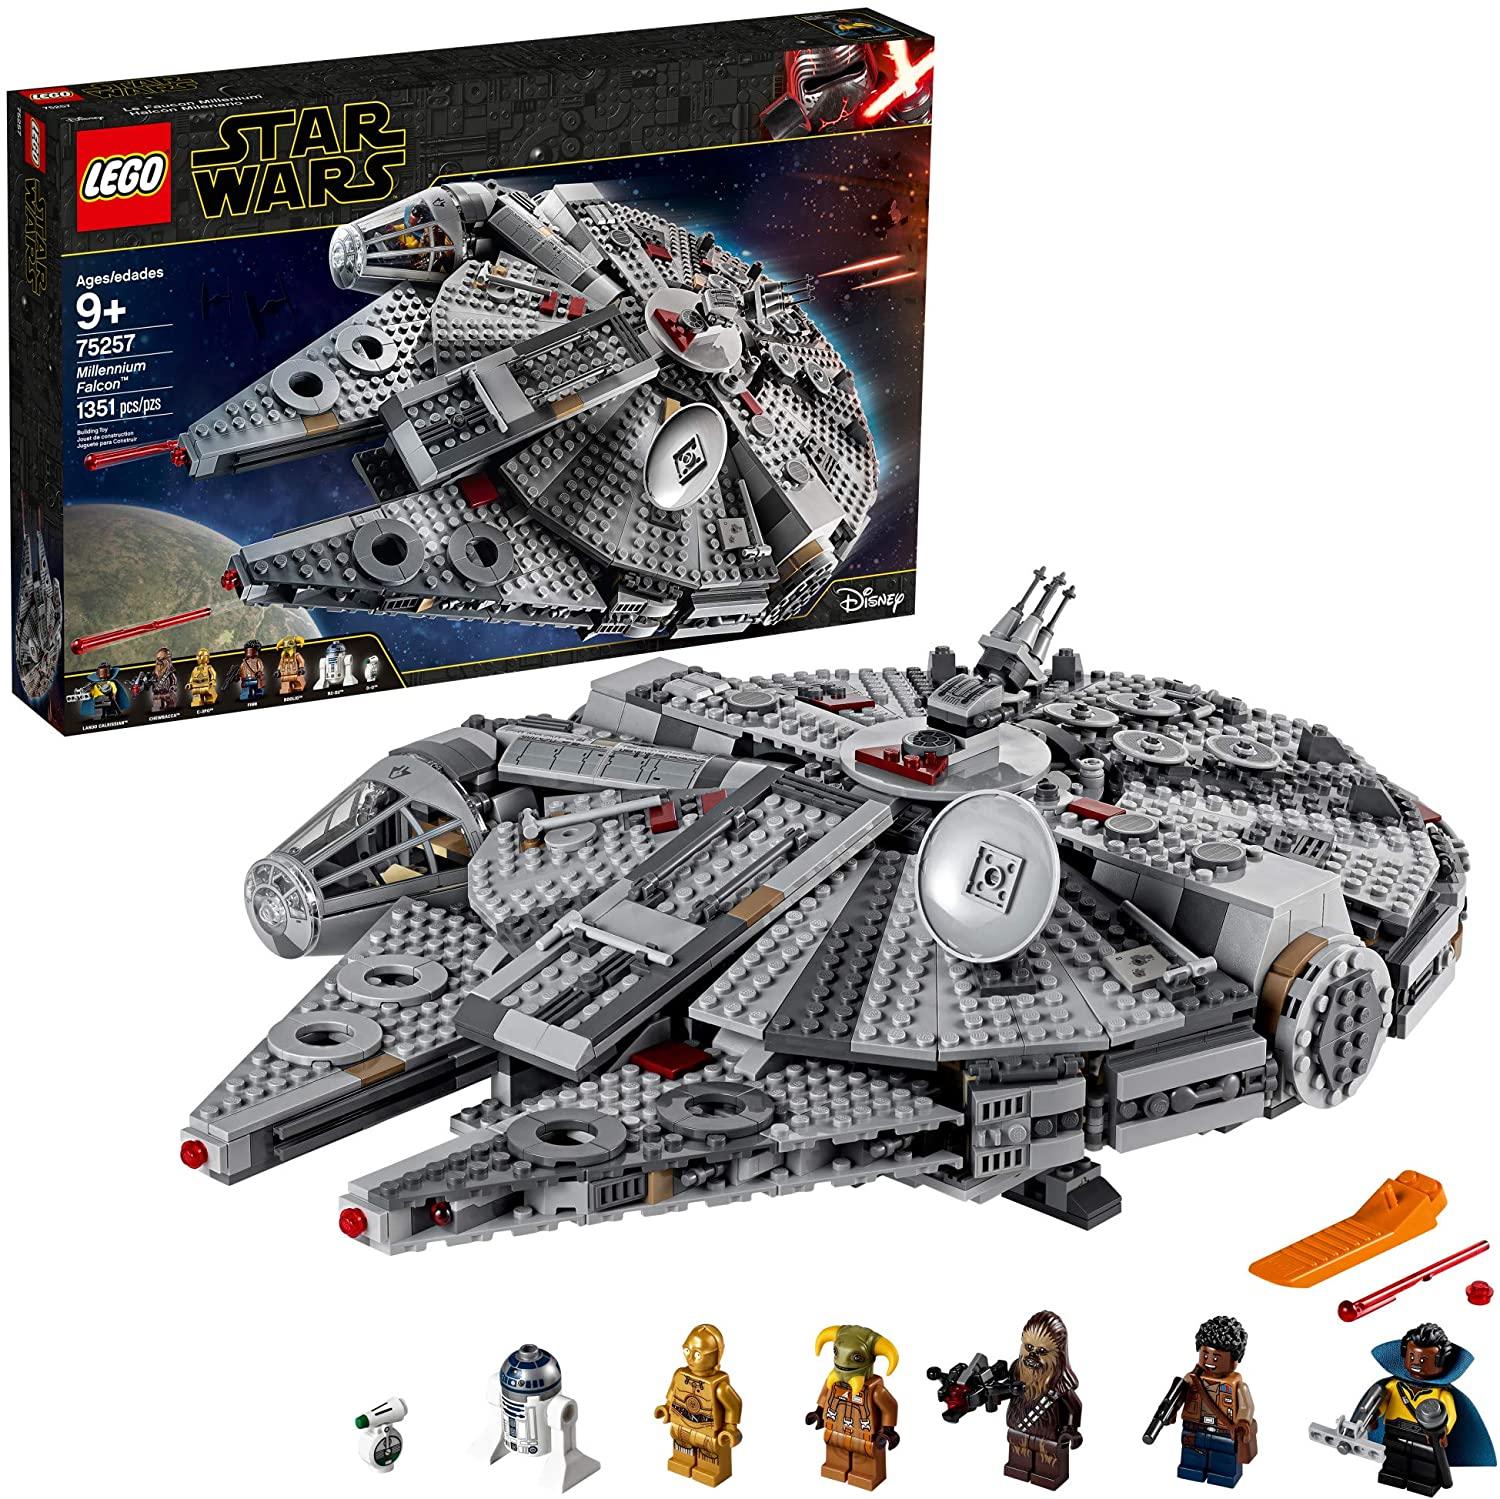 1351-Piece LEGO Star Wars Millennium Falcon Building Set for $127.99 Shipped